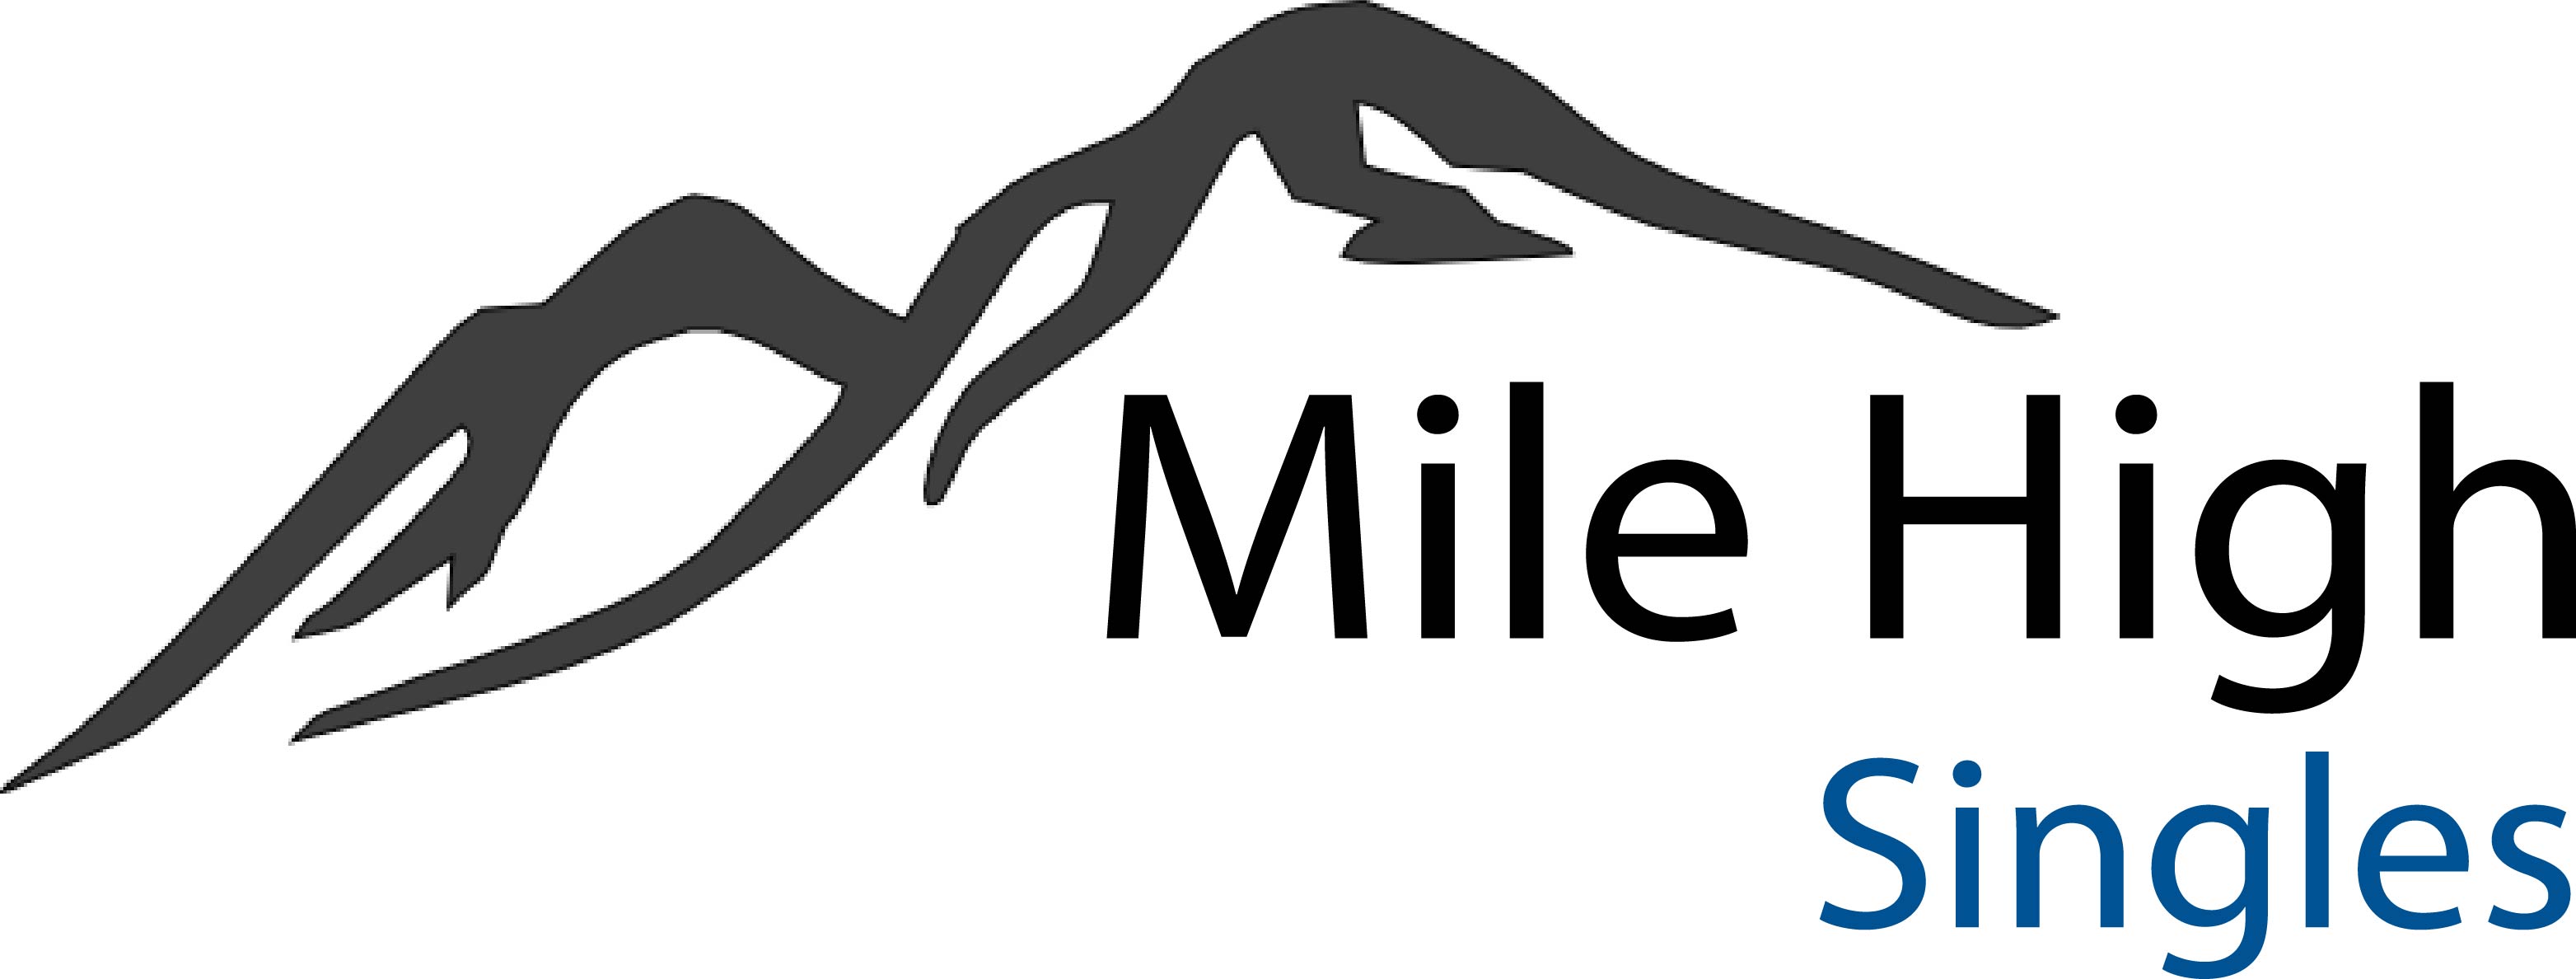 Mile High Singles Receives 2014 Denver Award